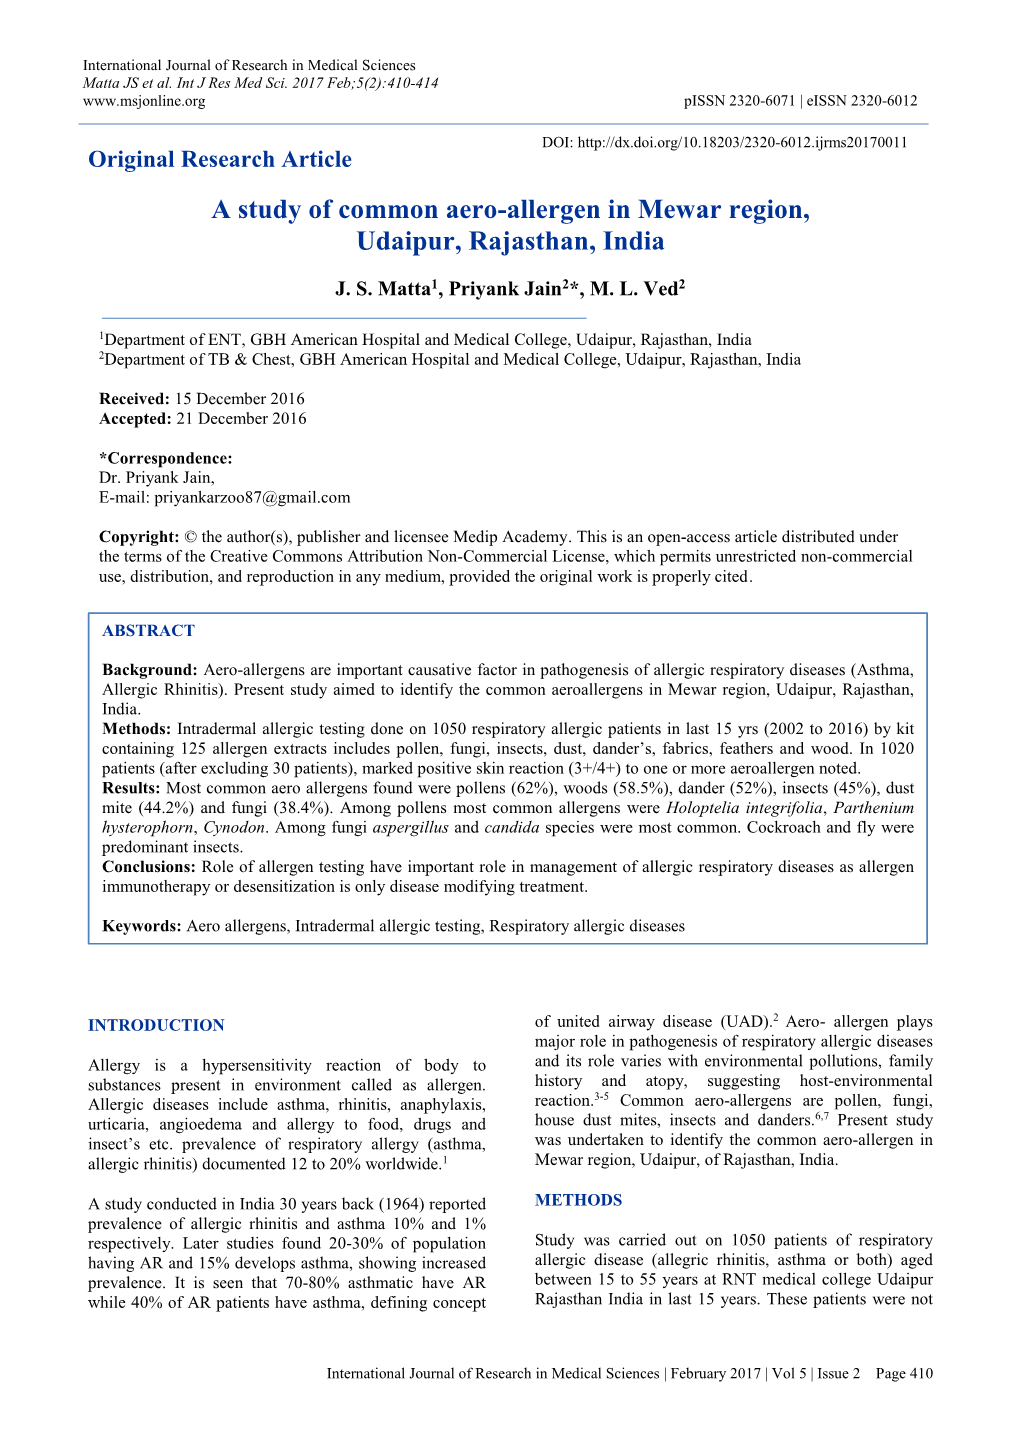 A Study of Common Aero-Allergen in Mewar Region, Udaipur, Rajasthan, India